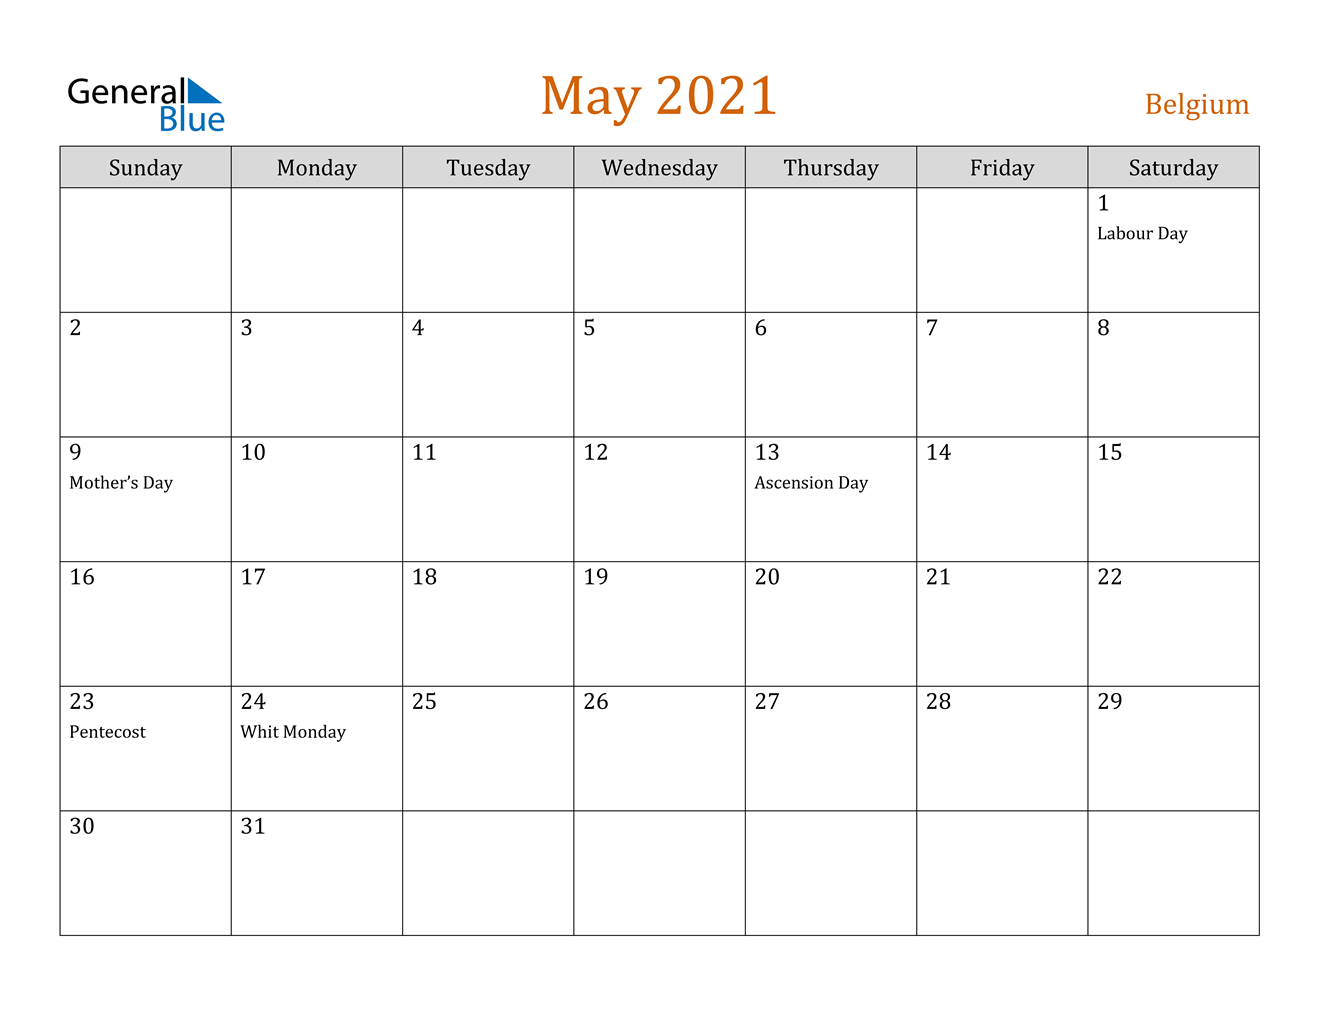 May 2021 Calendar - Belgium